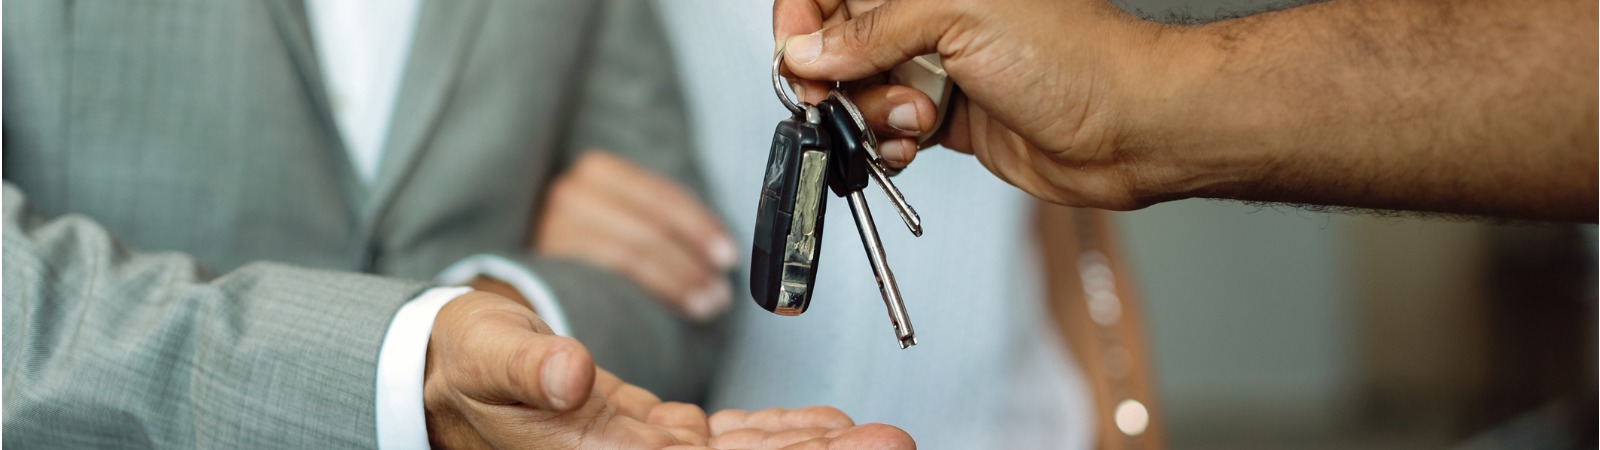 Mechanic handing keys to customer